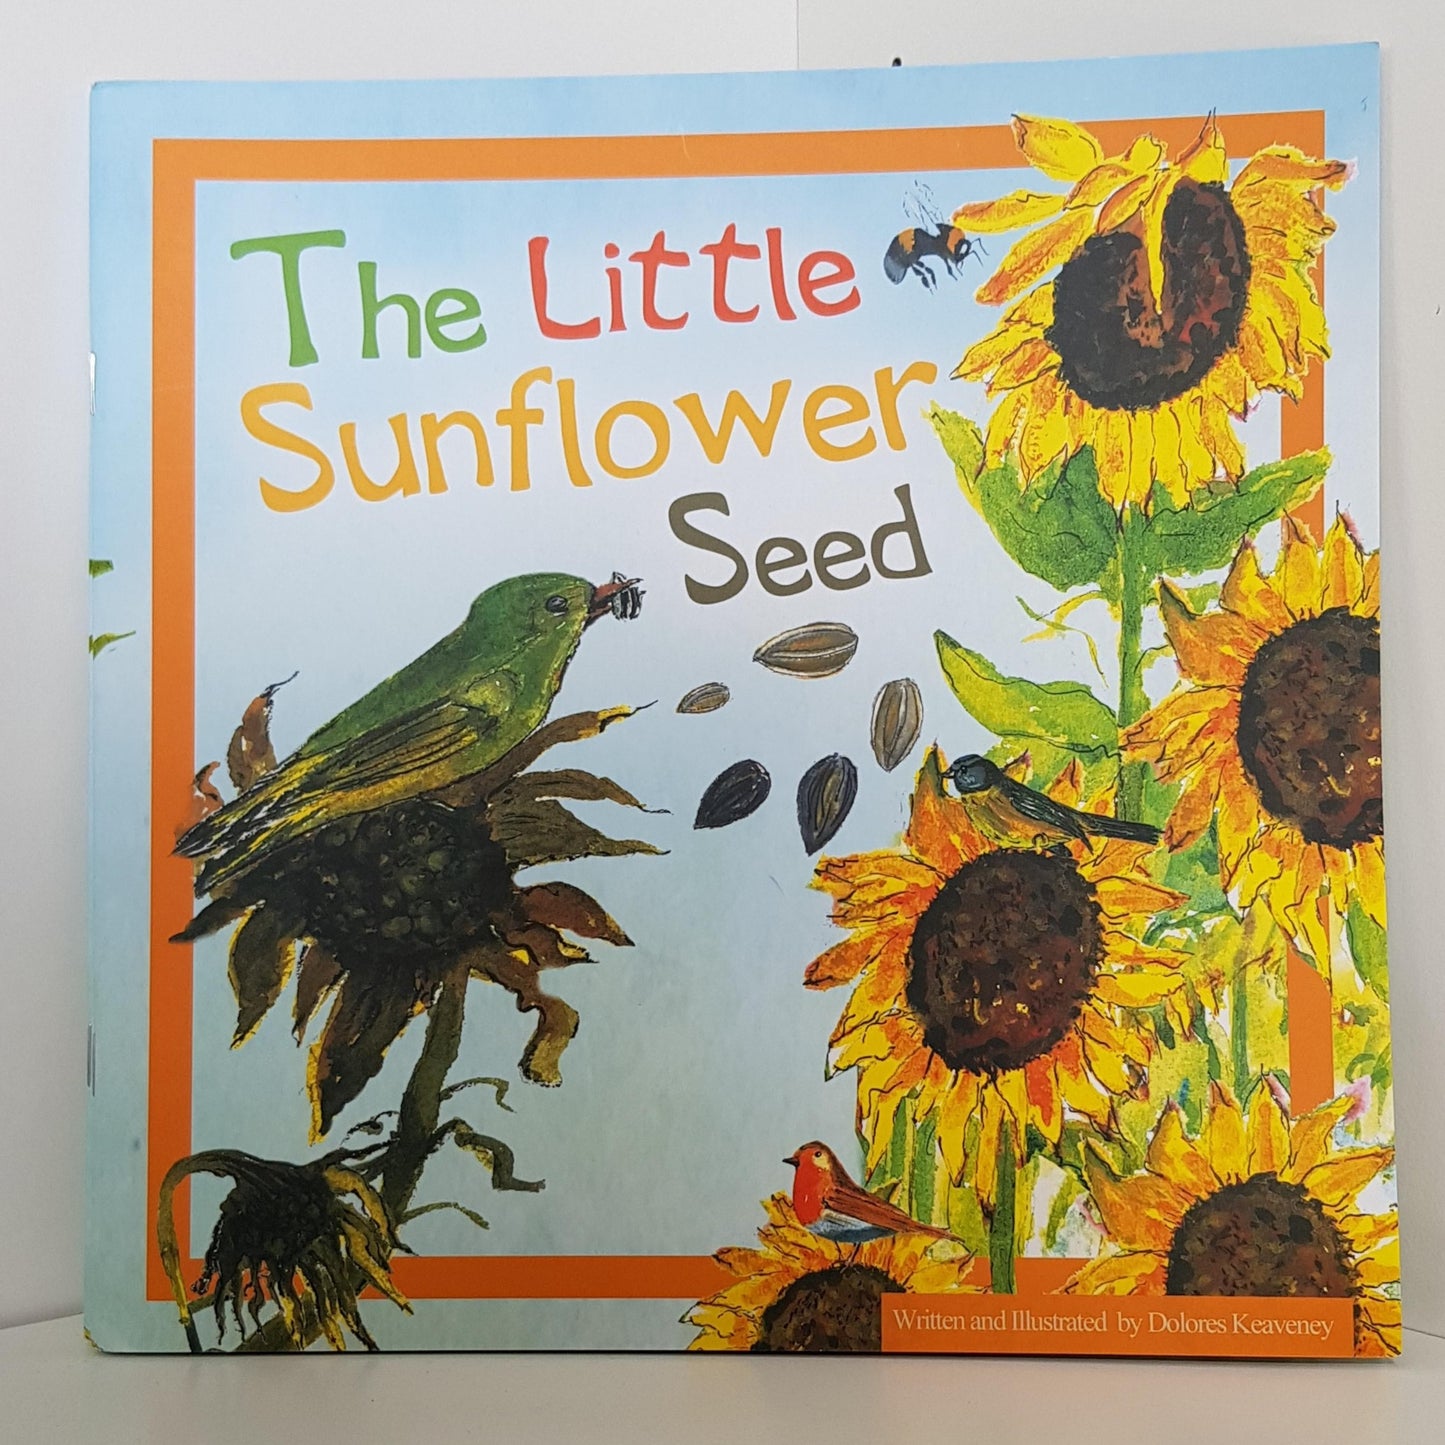 'The Little Sunflower Seed' by Dolores Keaveney